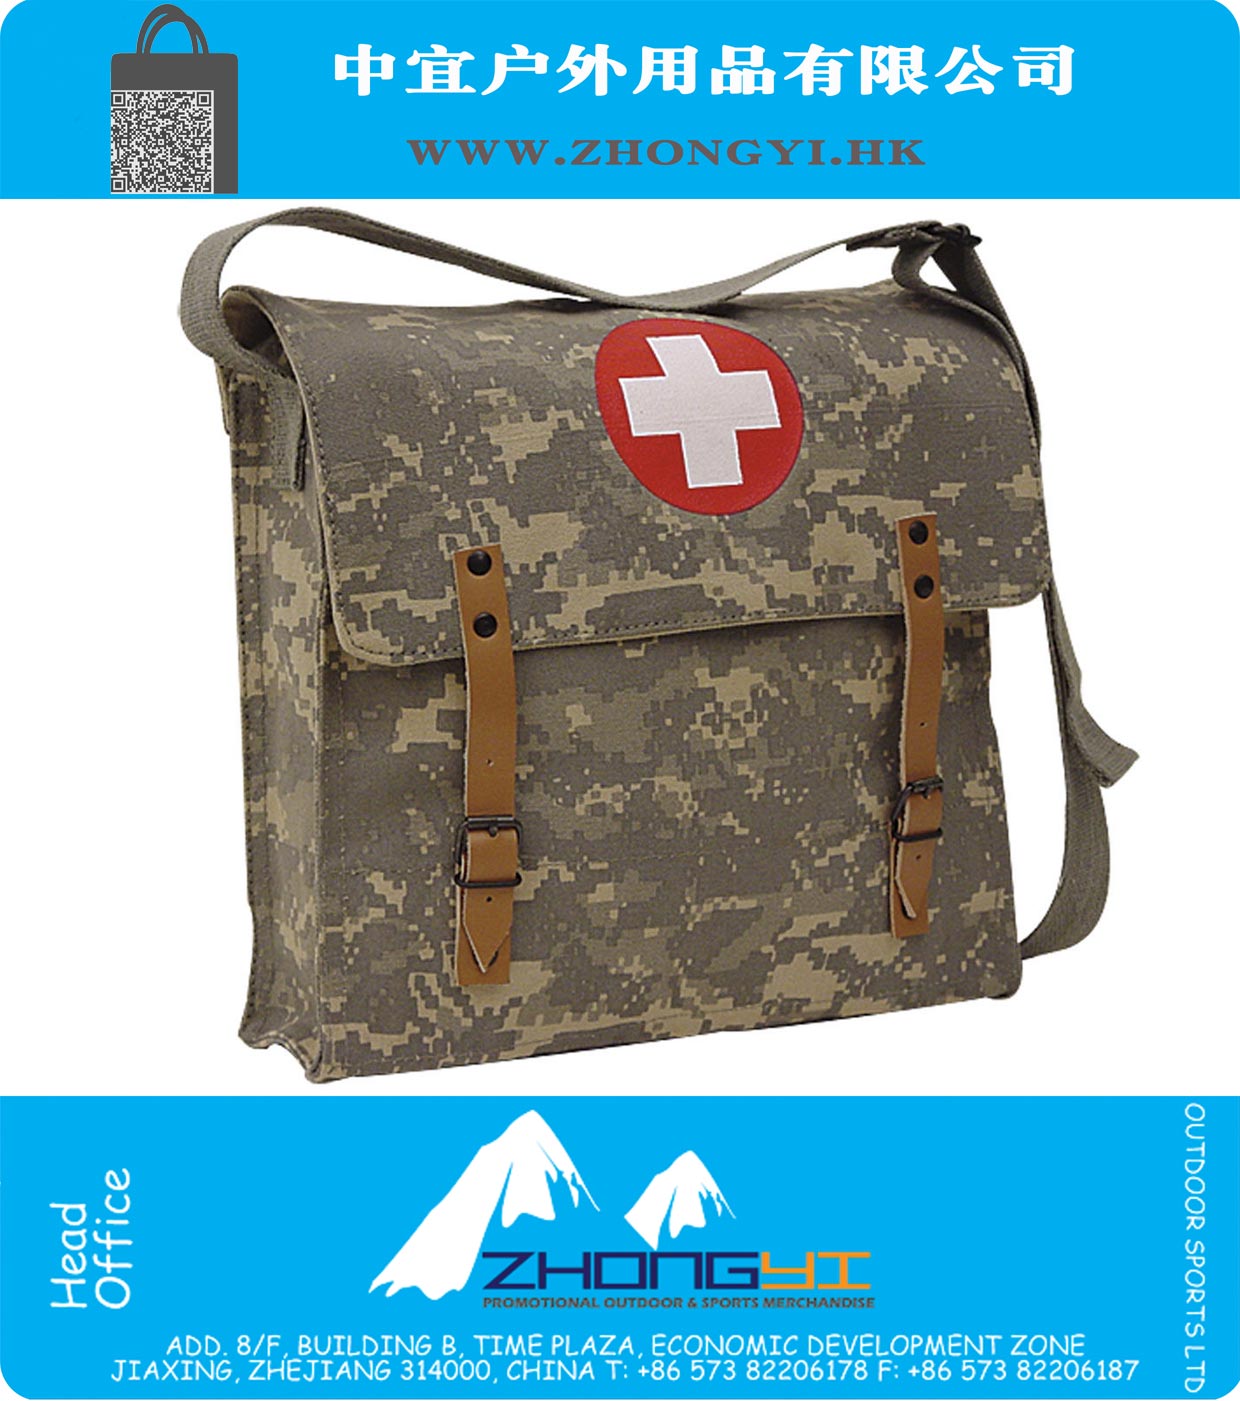 Militaire Duitse Style Medic Bag ACU Digital Emergency Rode Kruis Insignia Bag